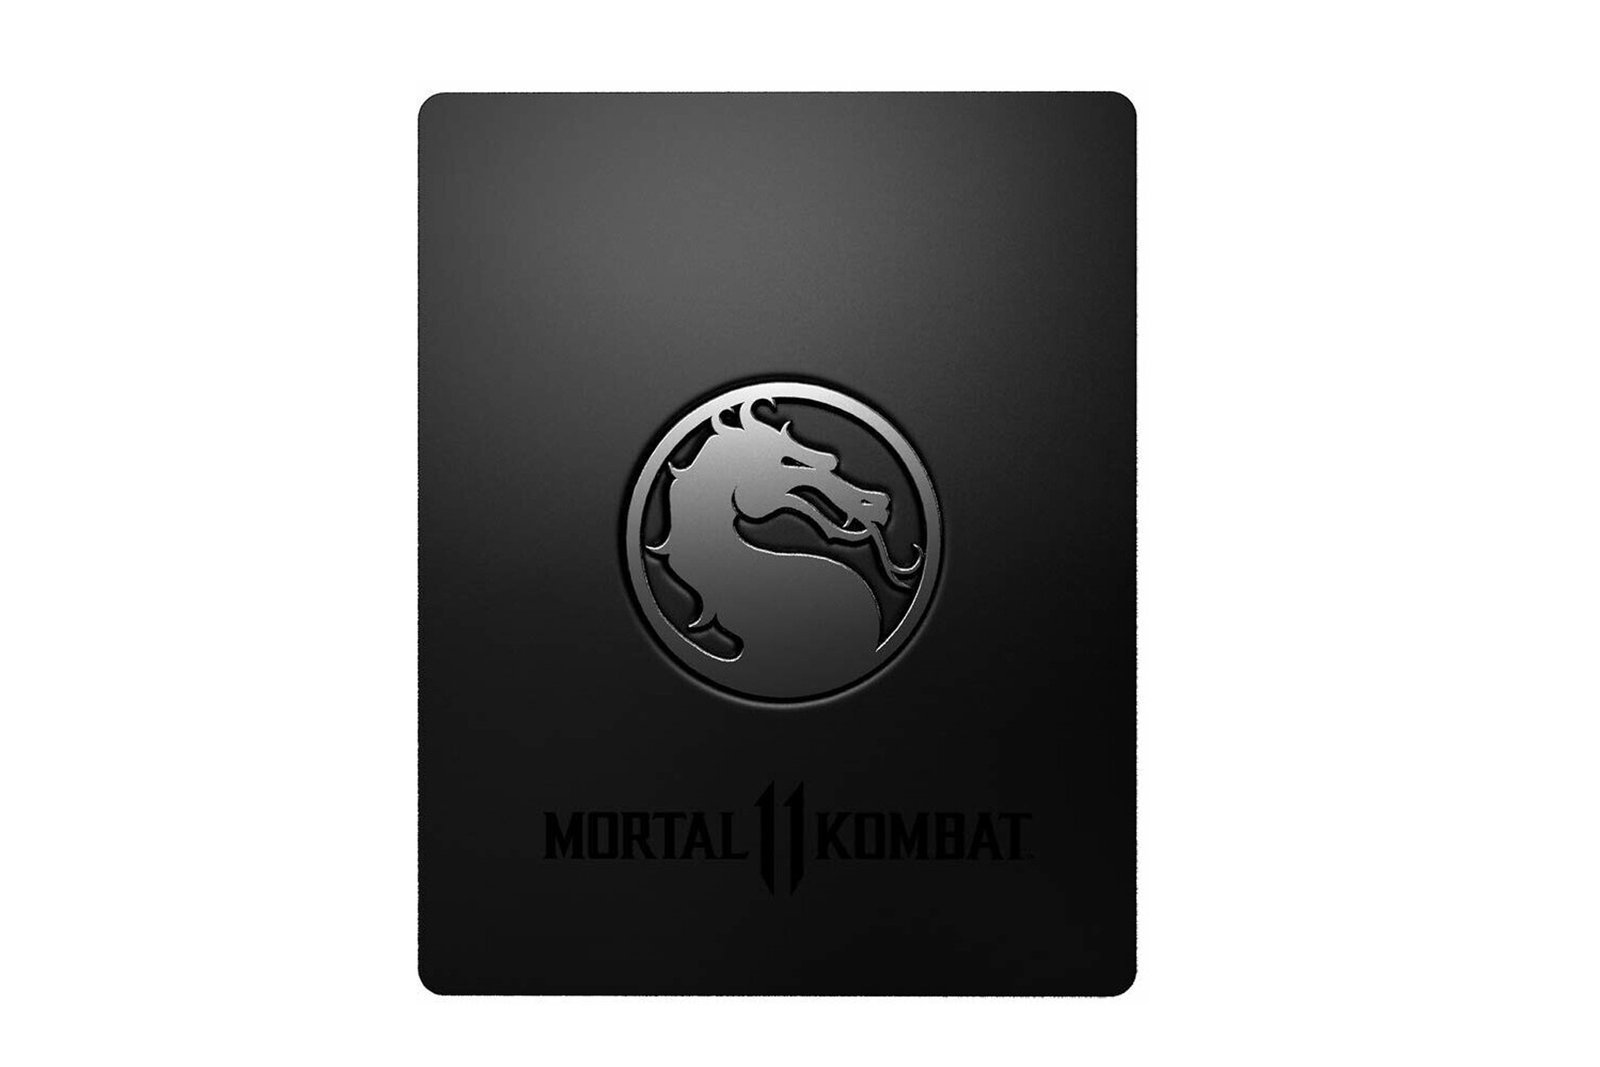 Mortal Kombat 11 Ultimate - Limited Edition PS5 + Steelbook